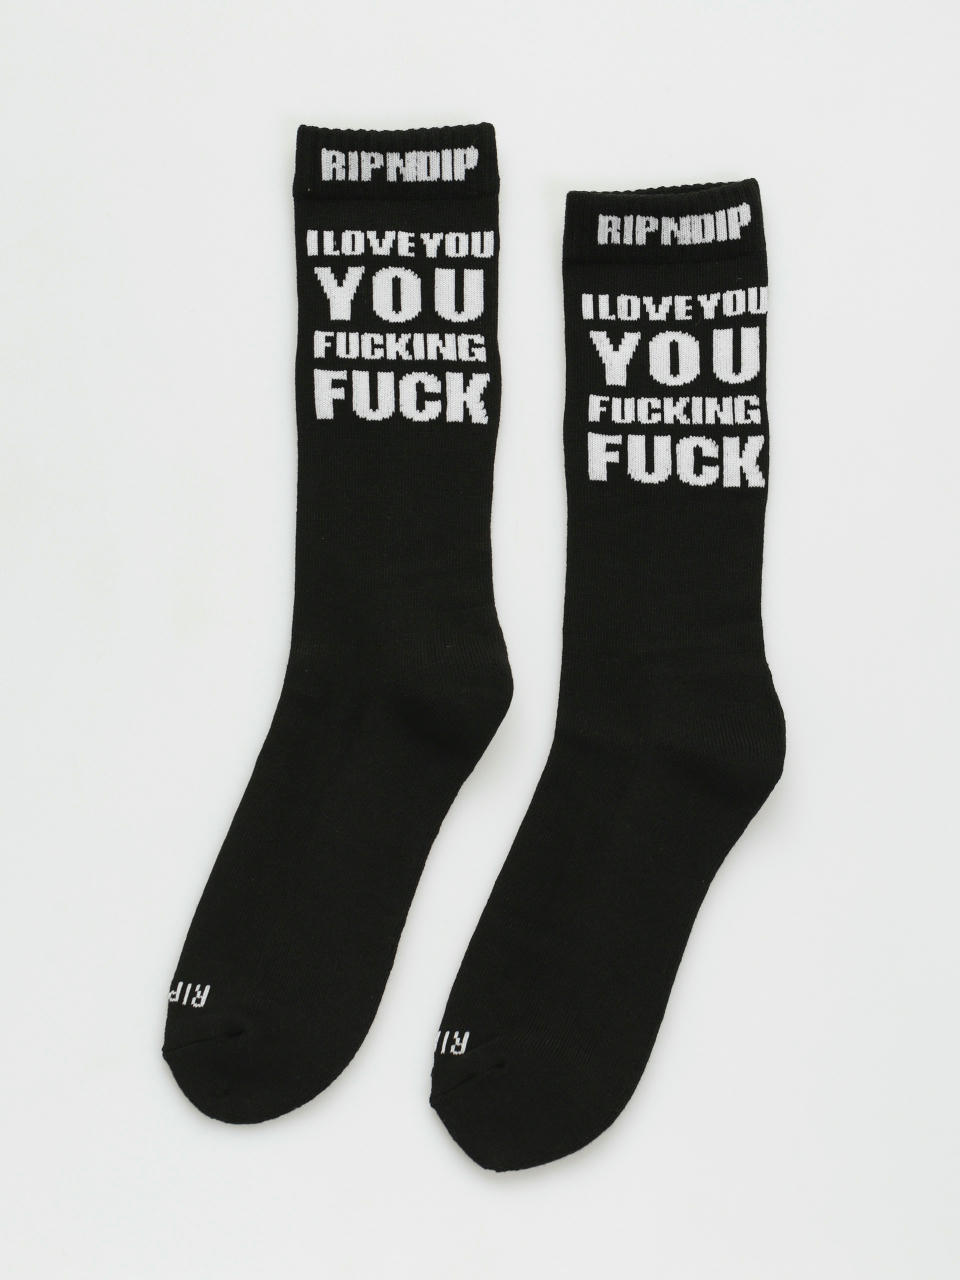 RipNDip Ily Fuckin Fuck Socken (black)